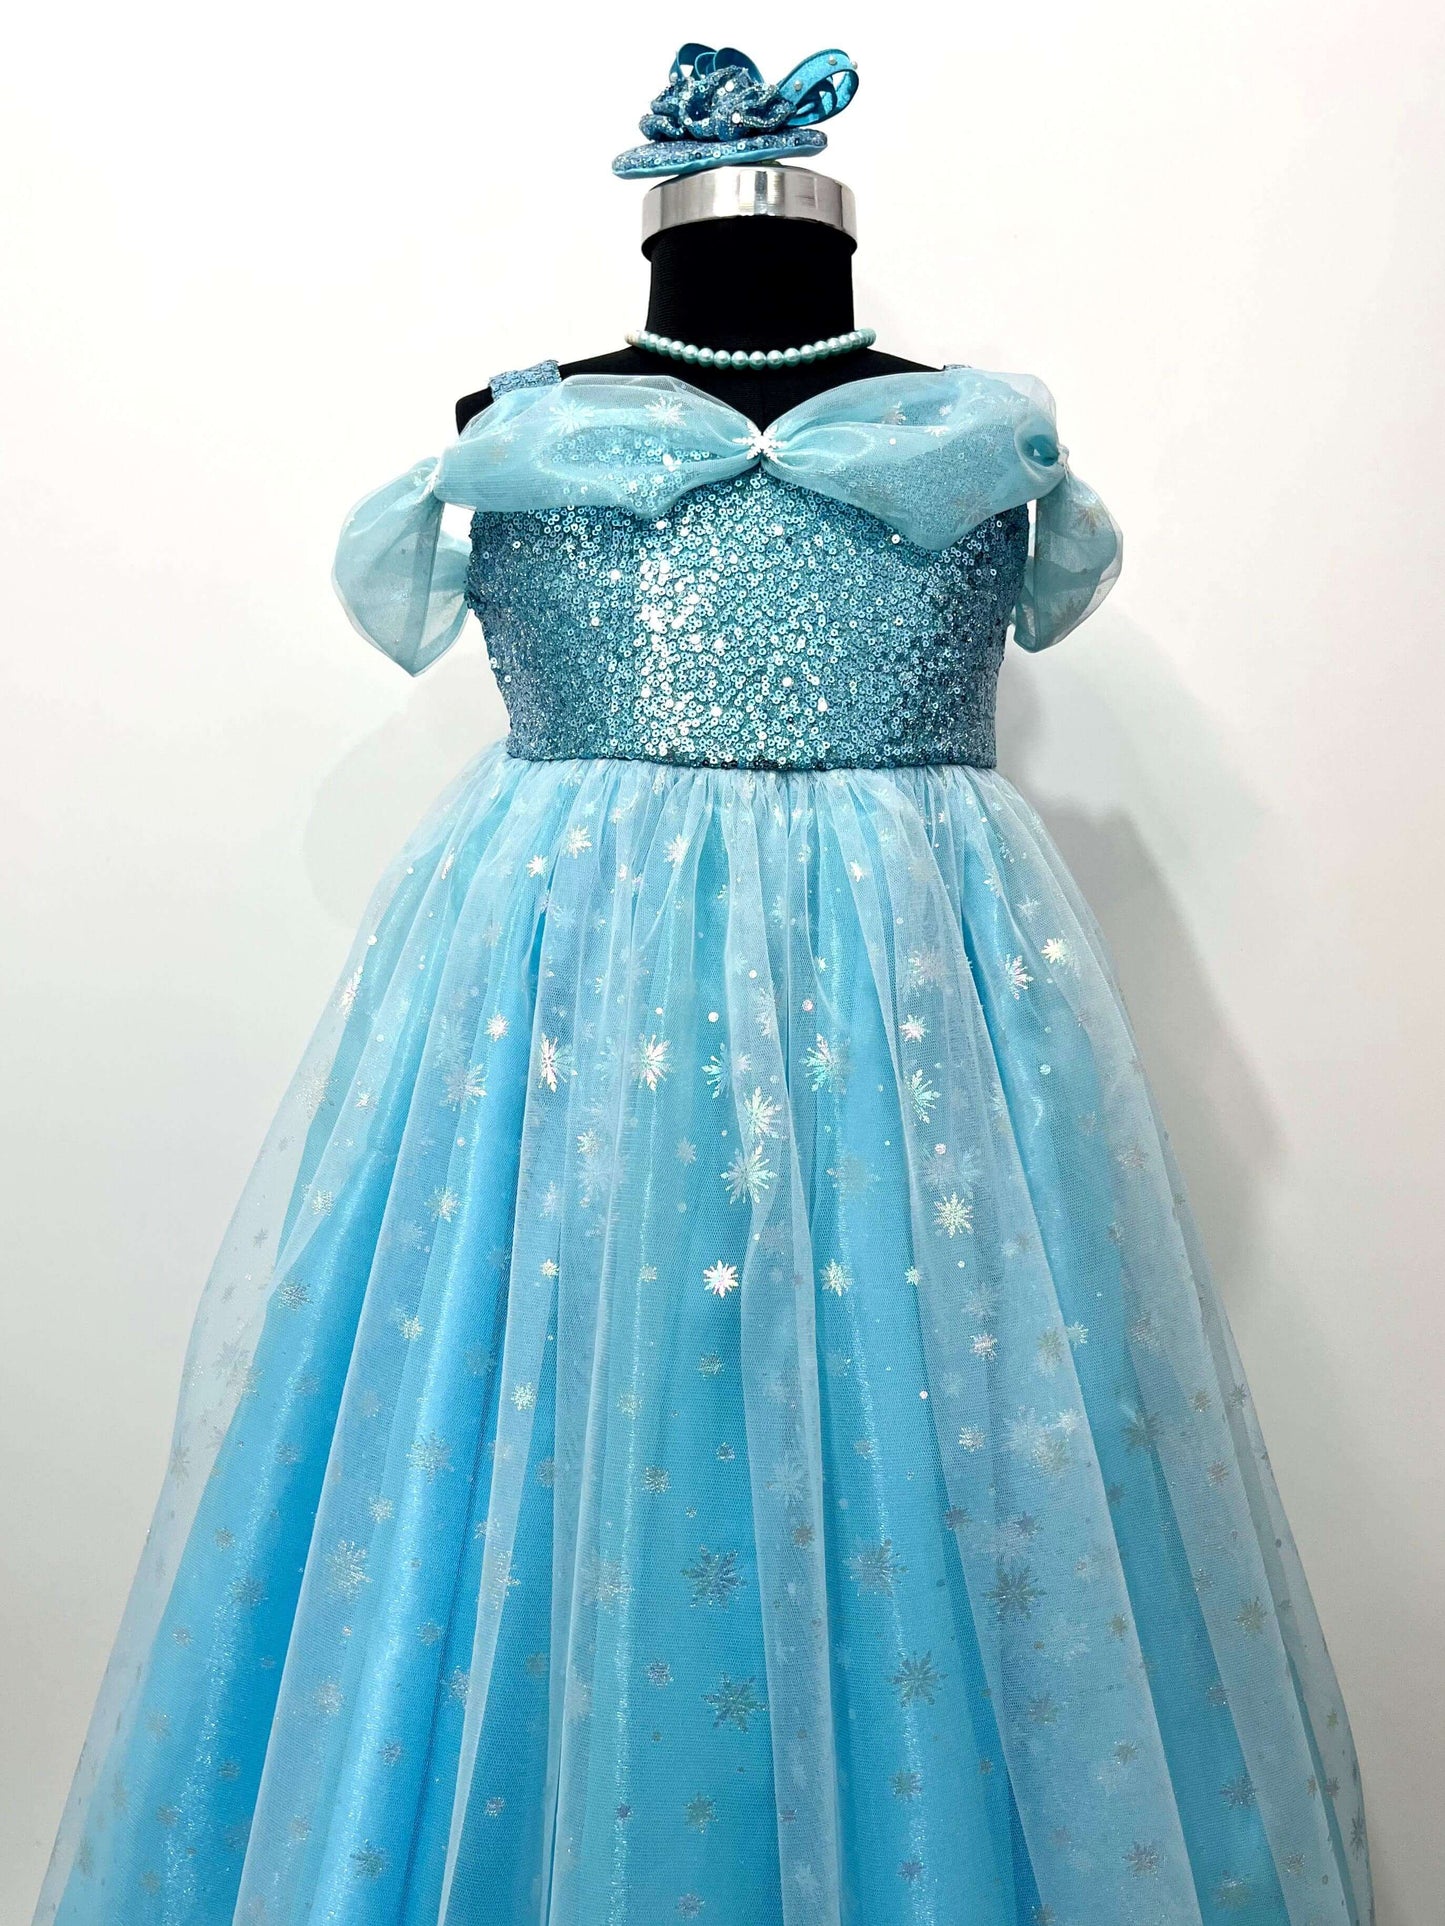 Disney Frozen Elsa Theme Dress for special occasions